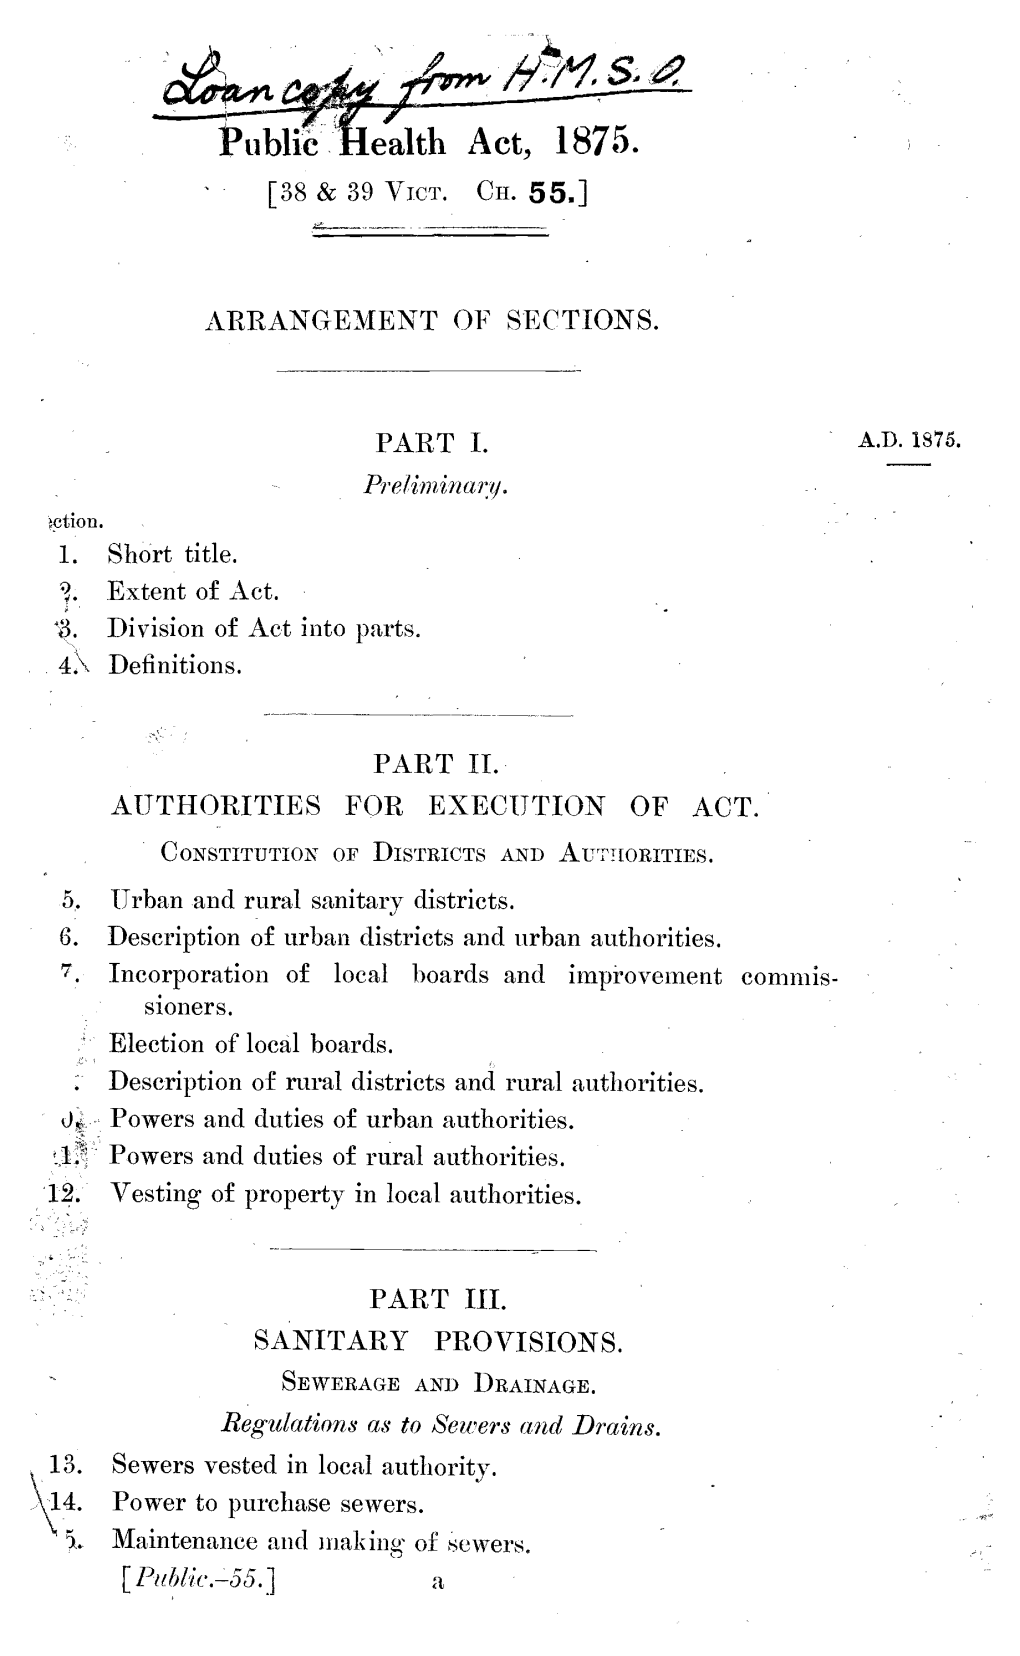 Public Health Act of 1875